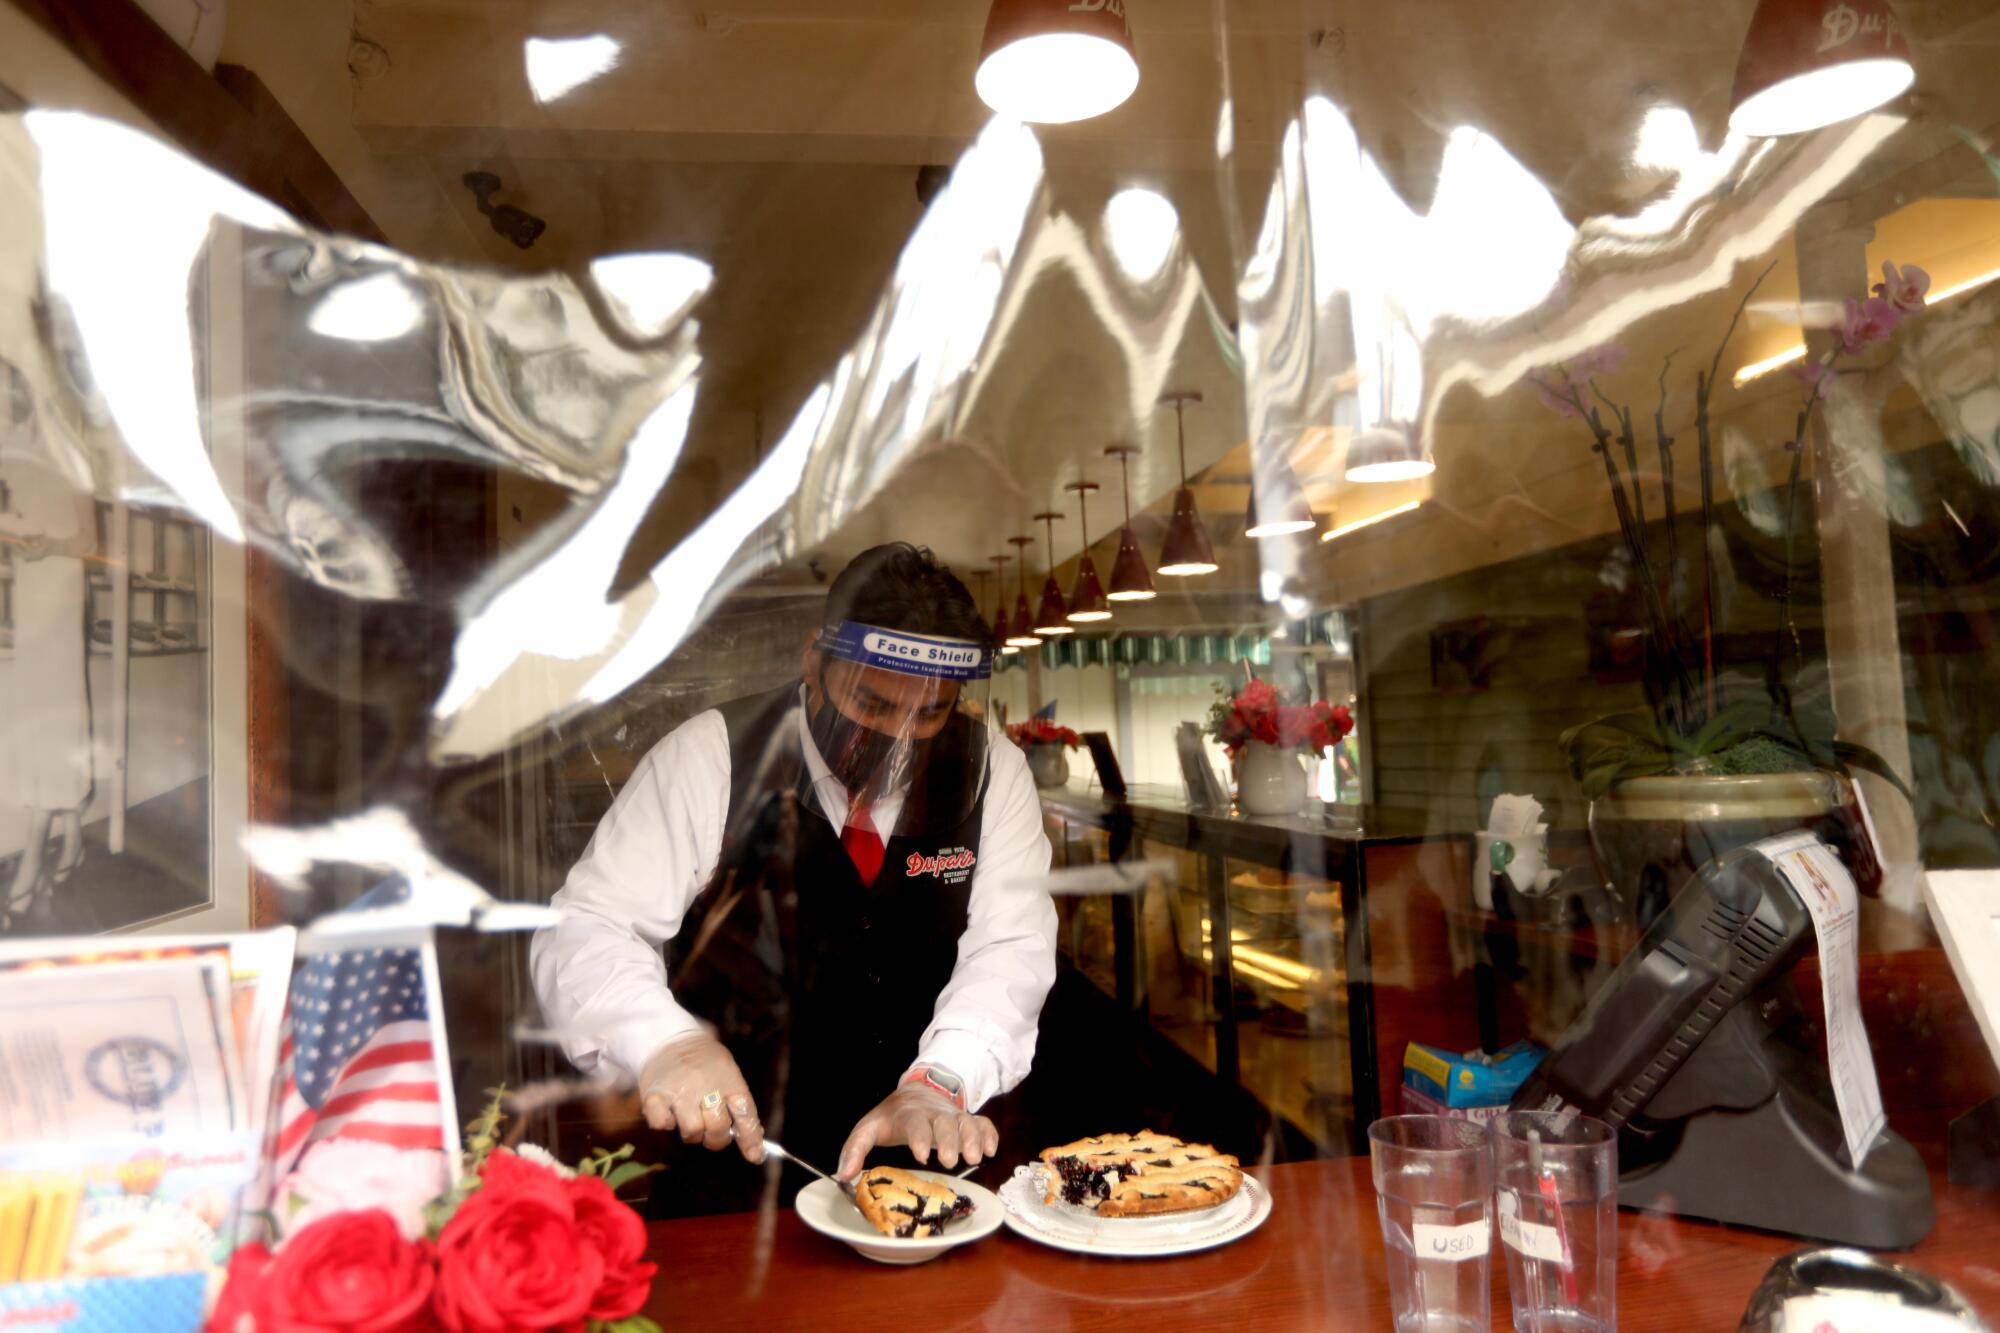 Jose Mlgar cuts a piece of pie for a customer at Du-par's restaurant.